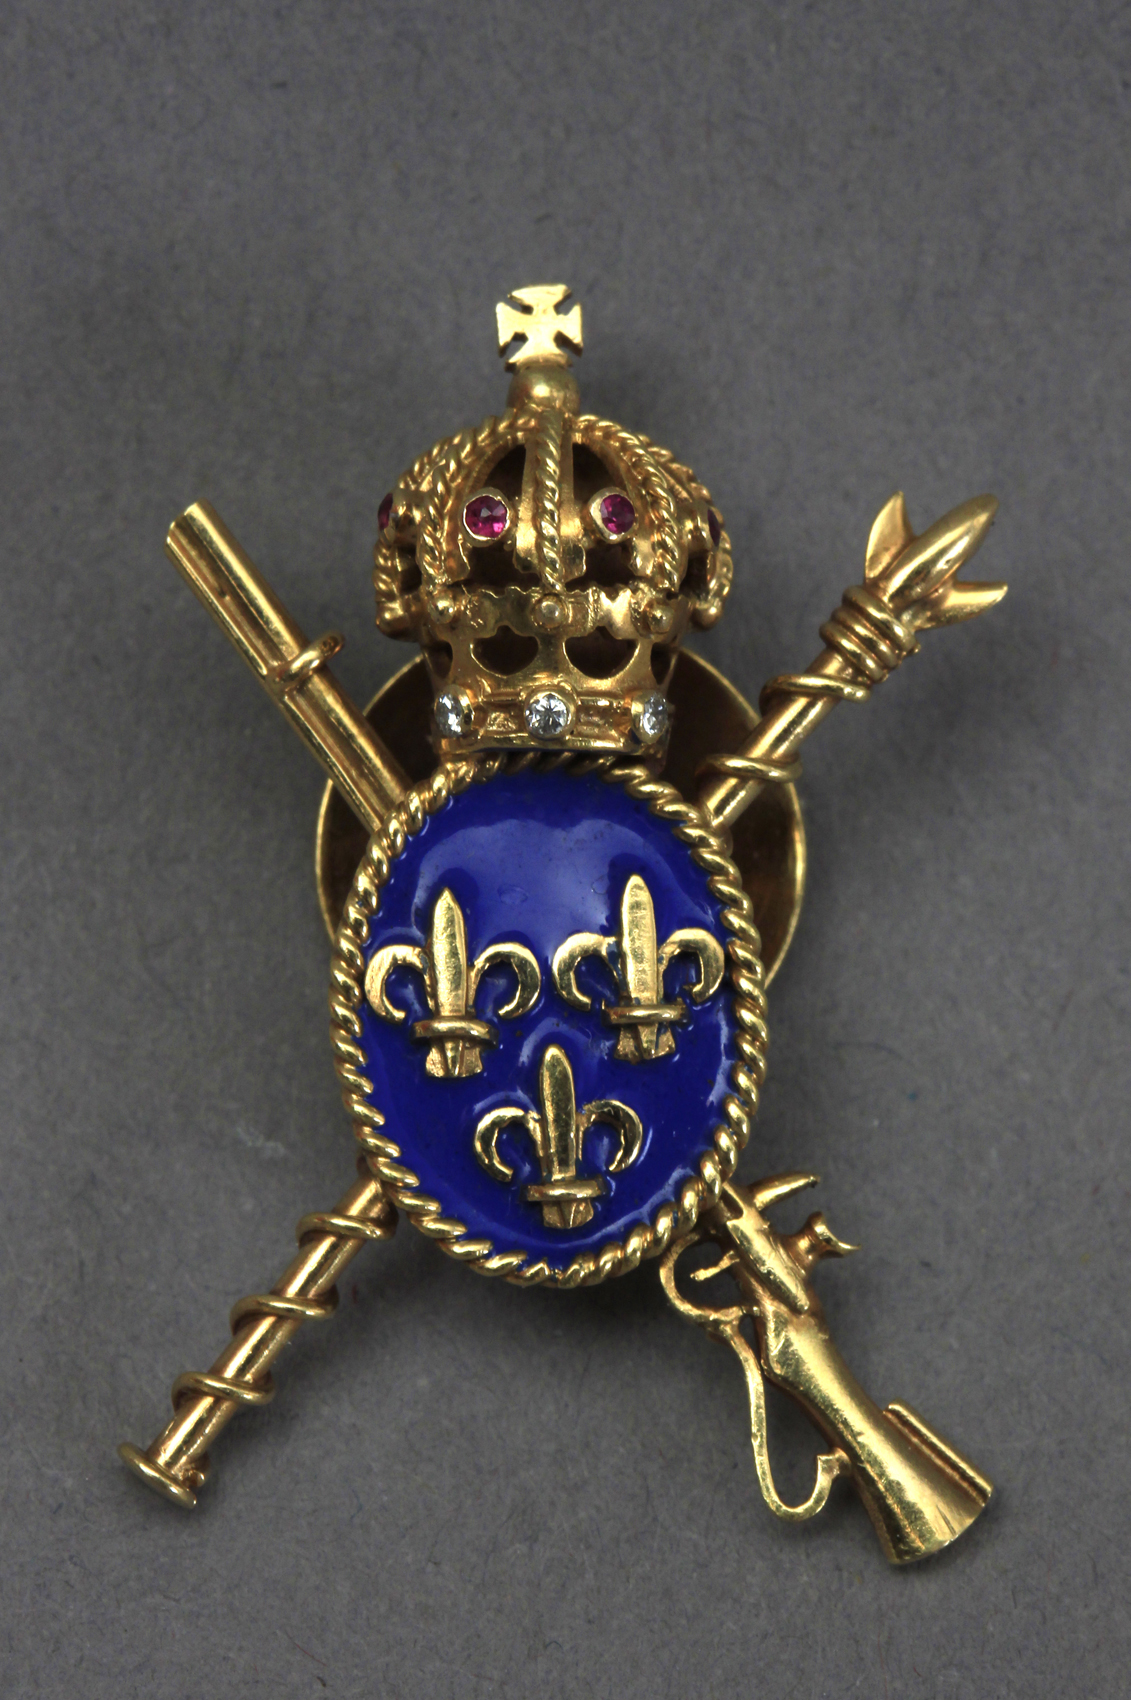 A Spanish Royal Guard pin circa 1980. Gold, diamonds and enamel